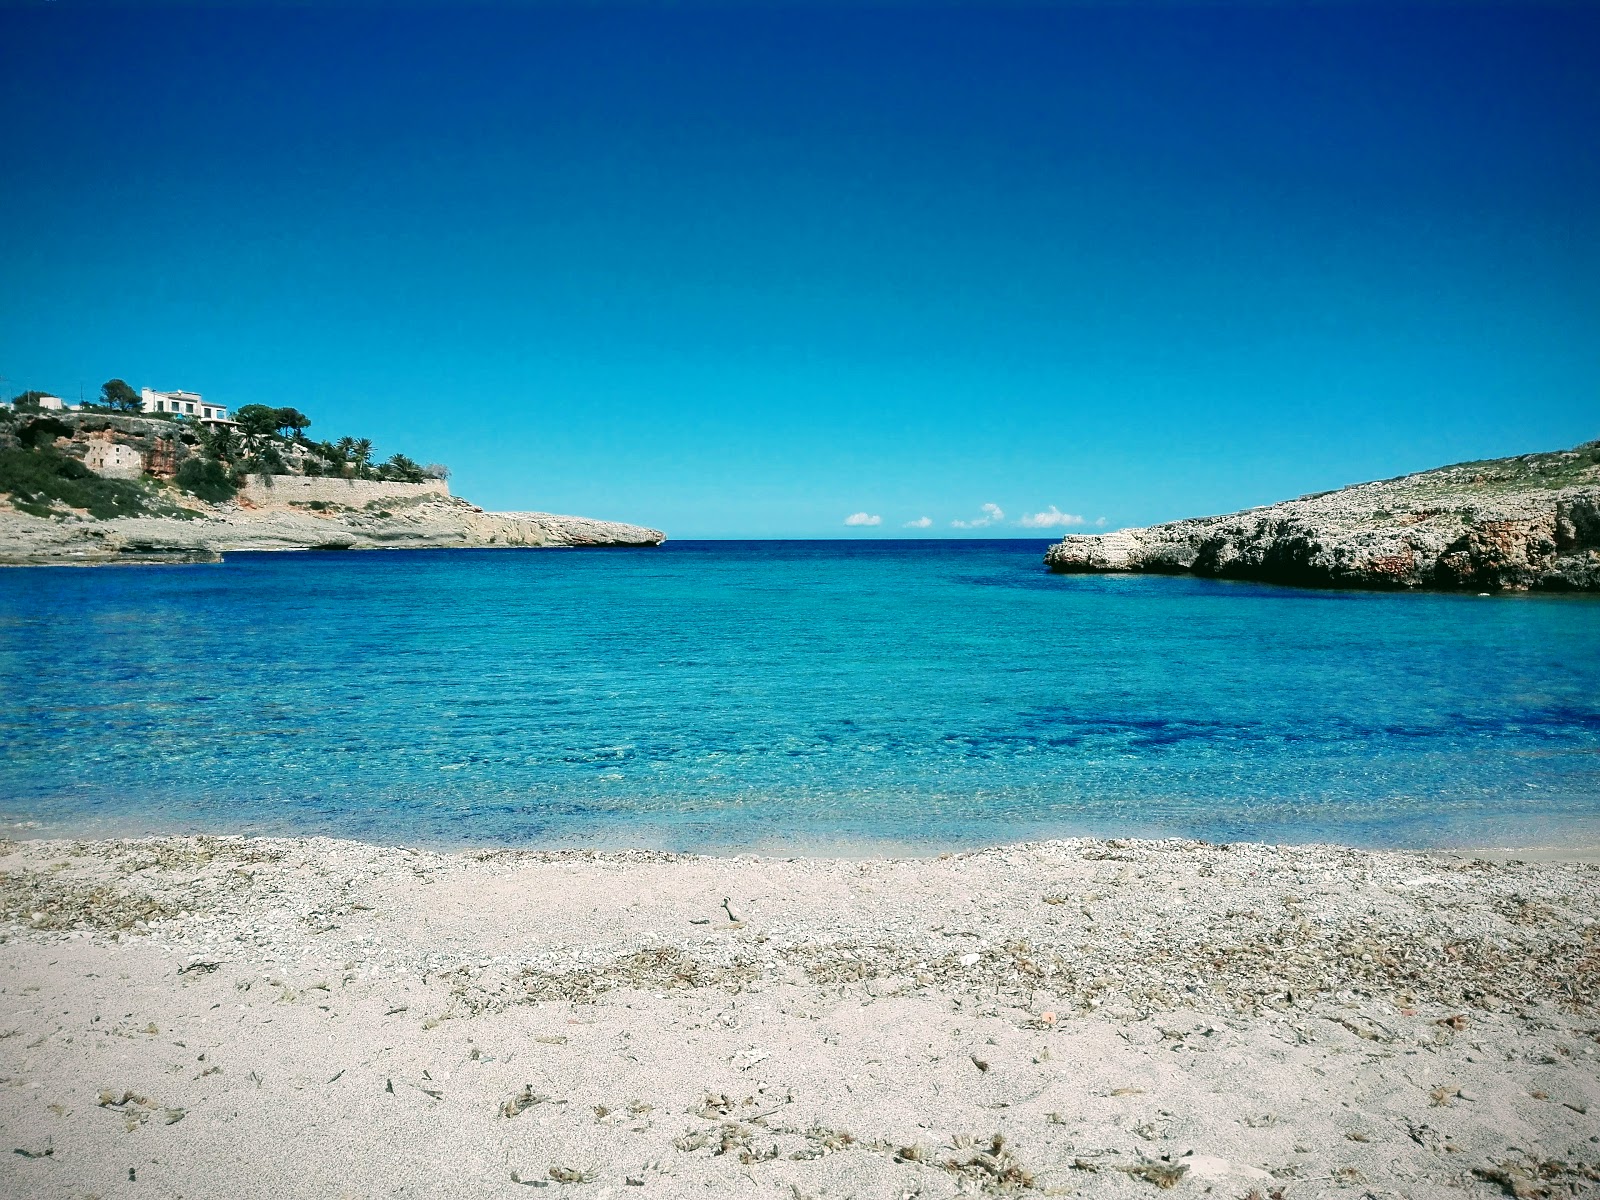 Photo of Playa Cala Murada and the settlement